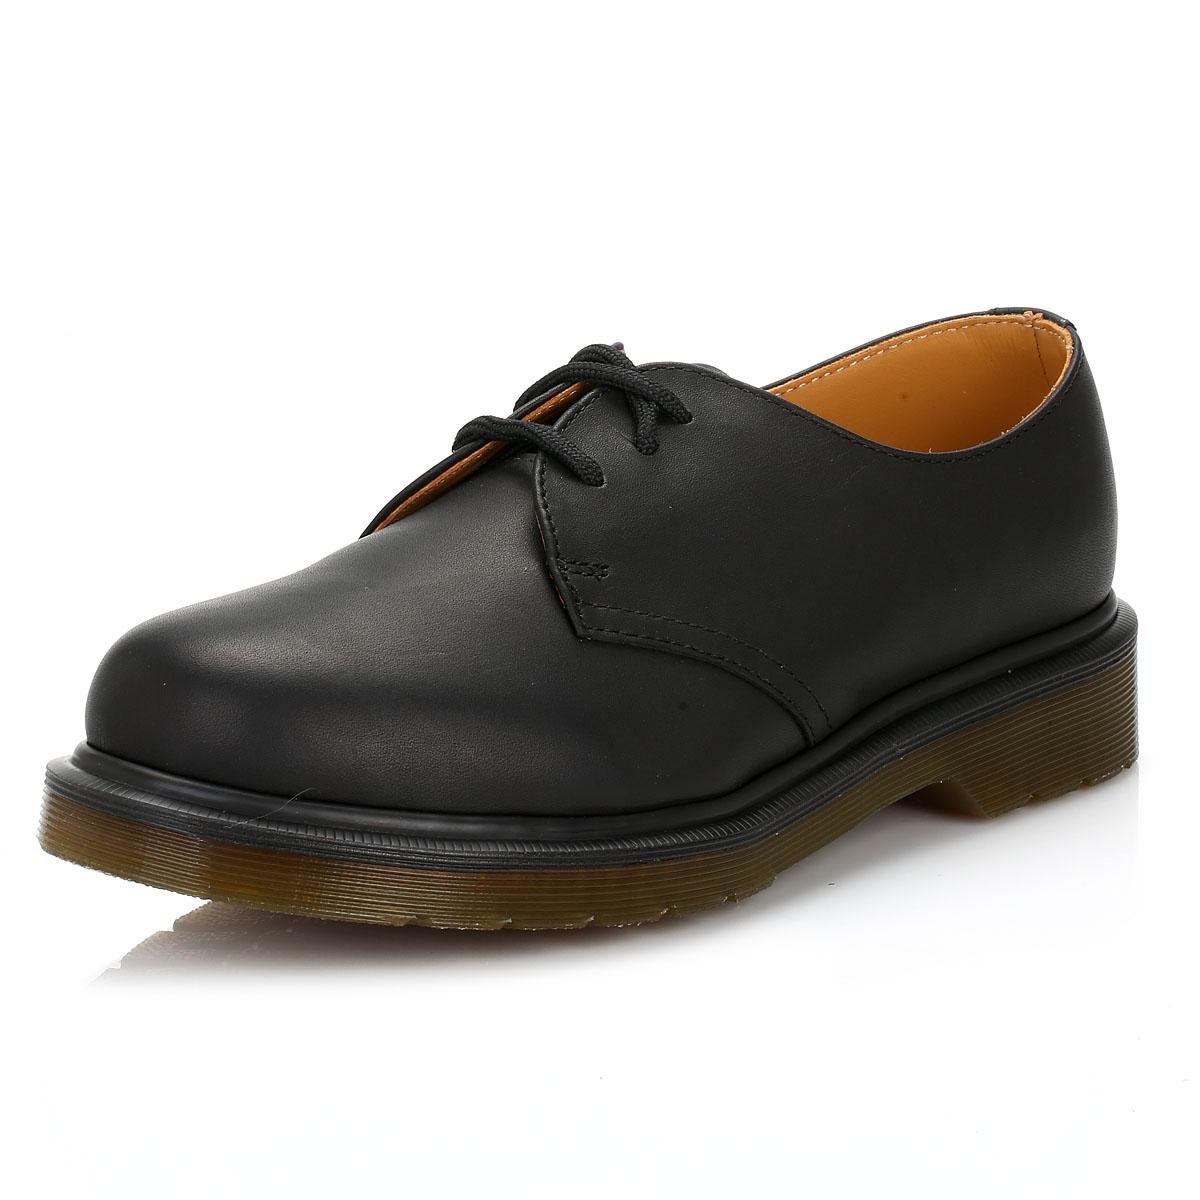 Dr. Martens Leather Dr. Martens 1461 Greasy Black Shoes for Men - Lyst